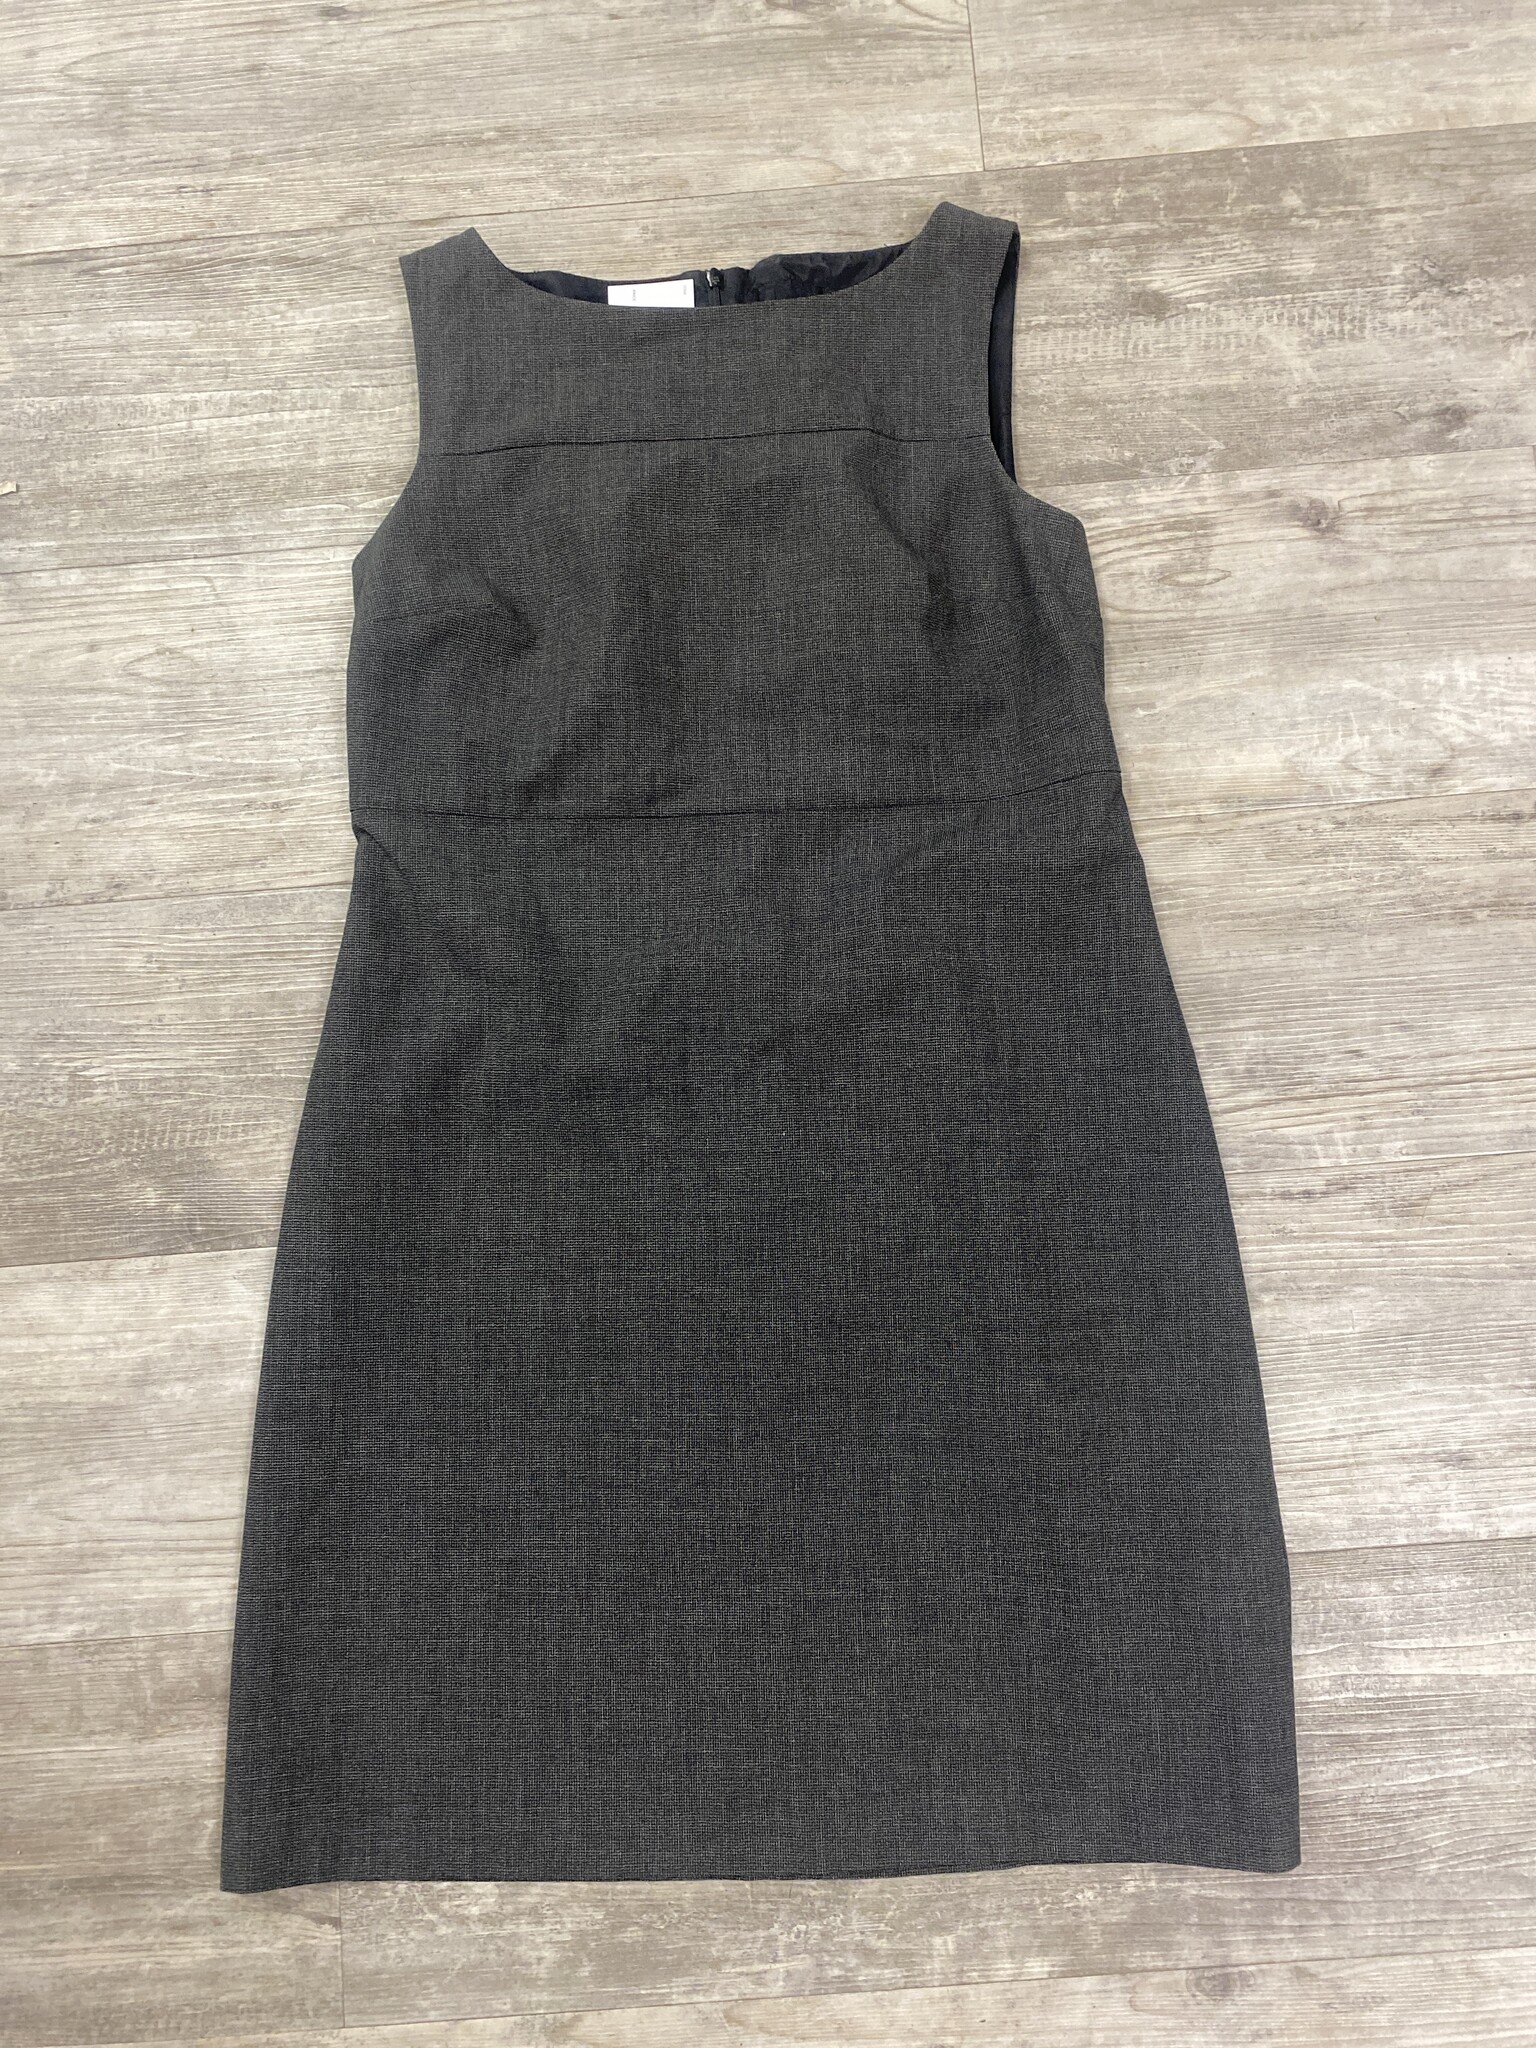 Grey Lined Dress Size L